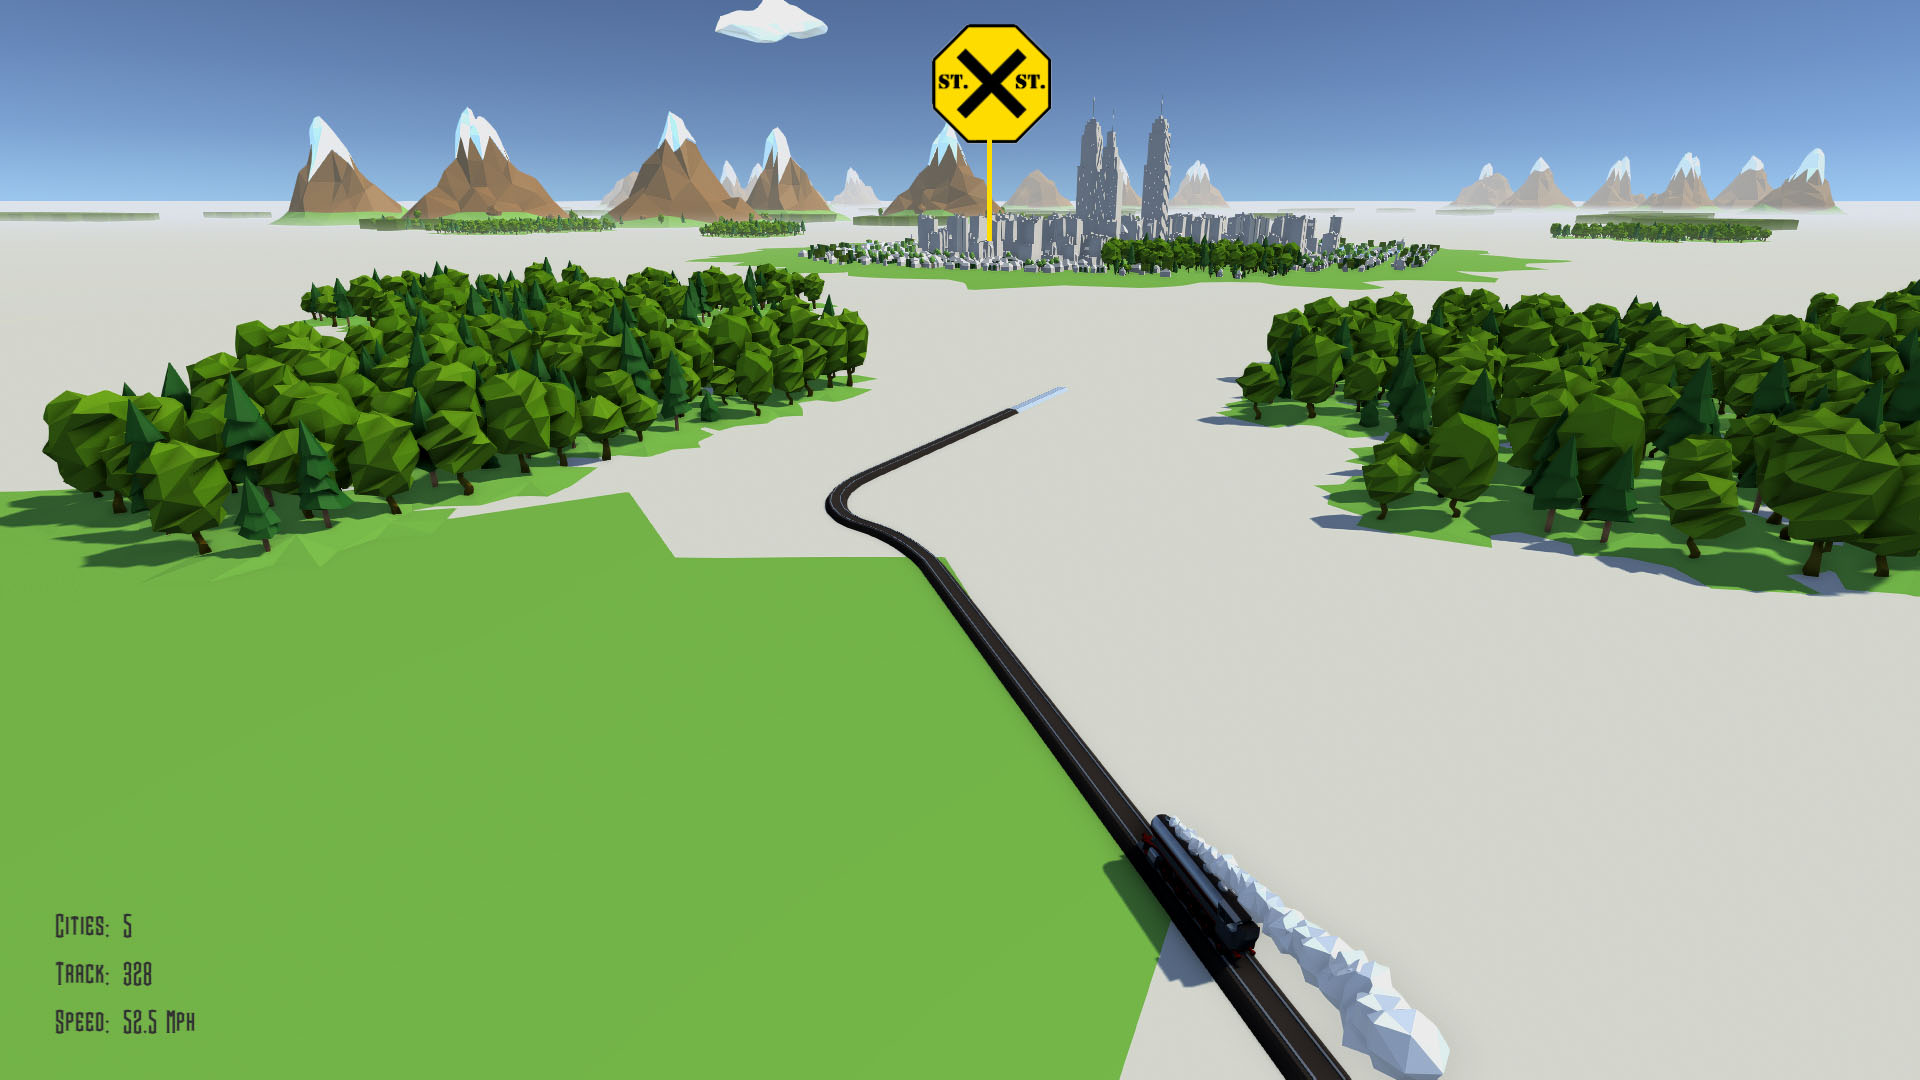 Runaway Train screenshot